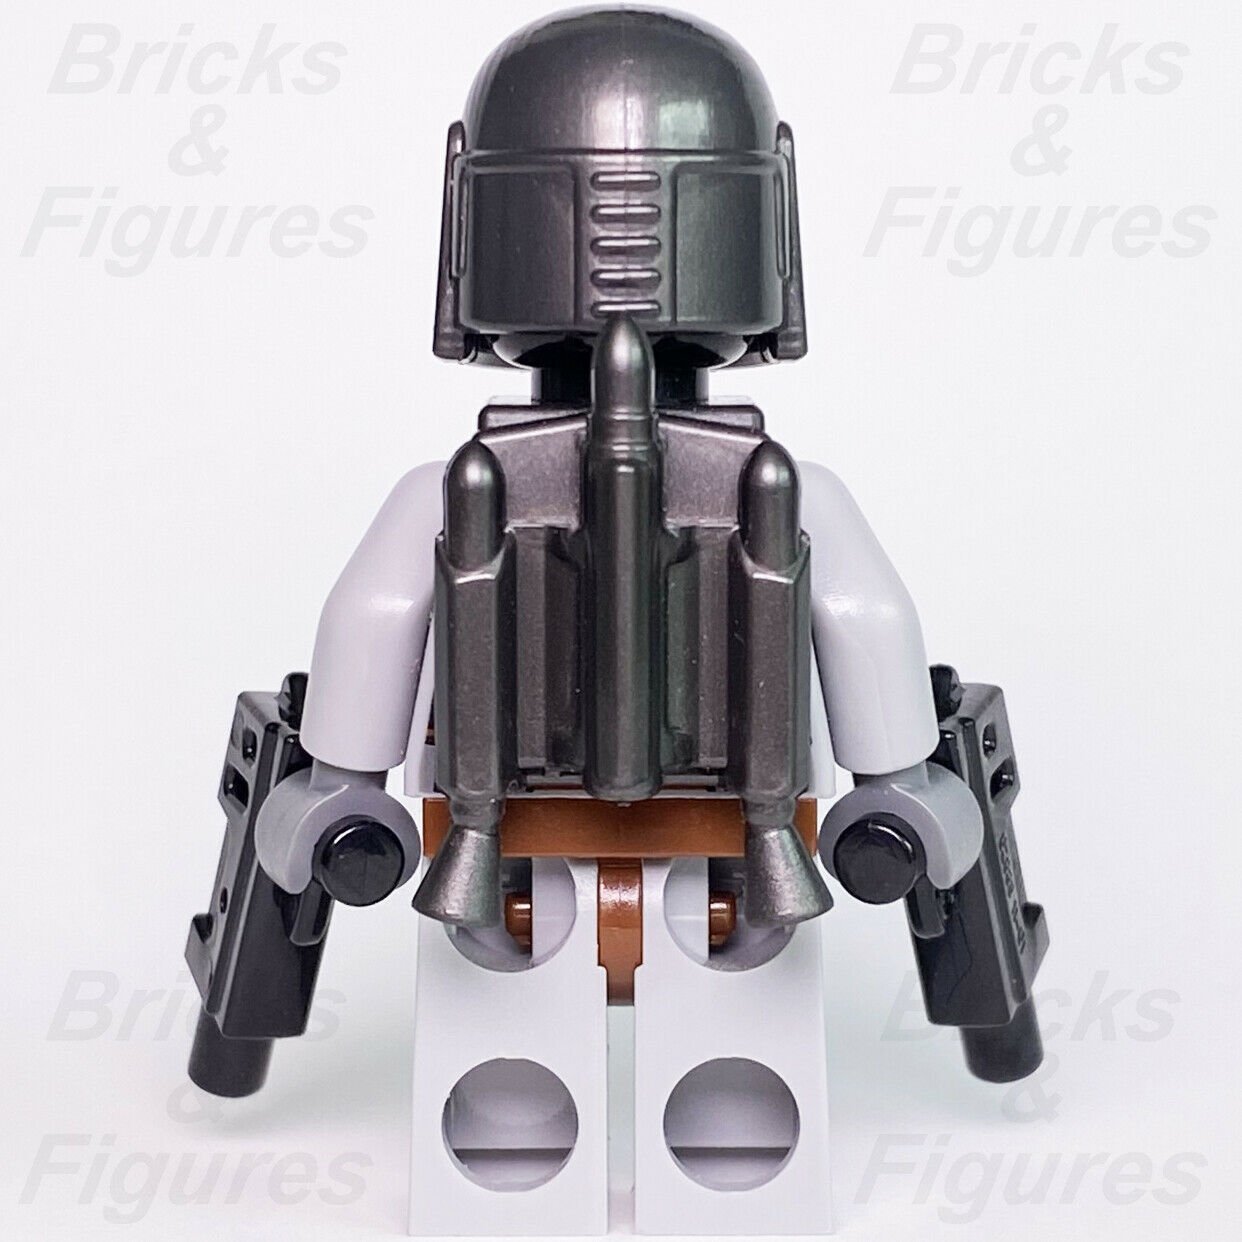 Star Wars LEGO Mandalorian Loyalist The Clone Wars Minifigure 75316 sw1164 - Bricks & Figures